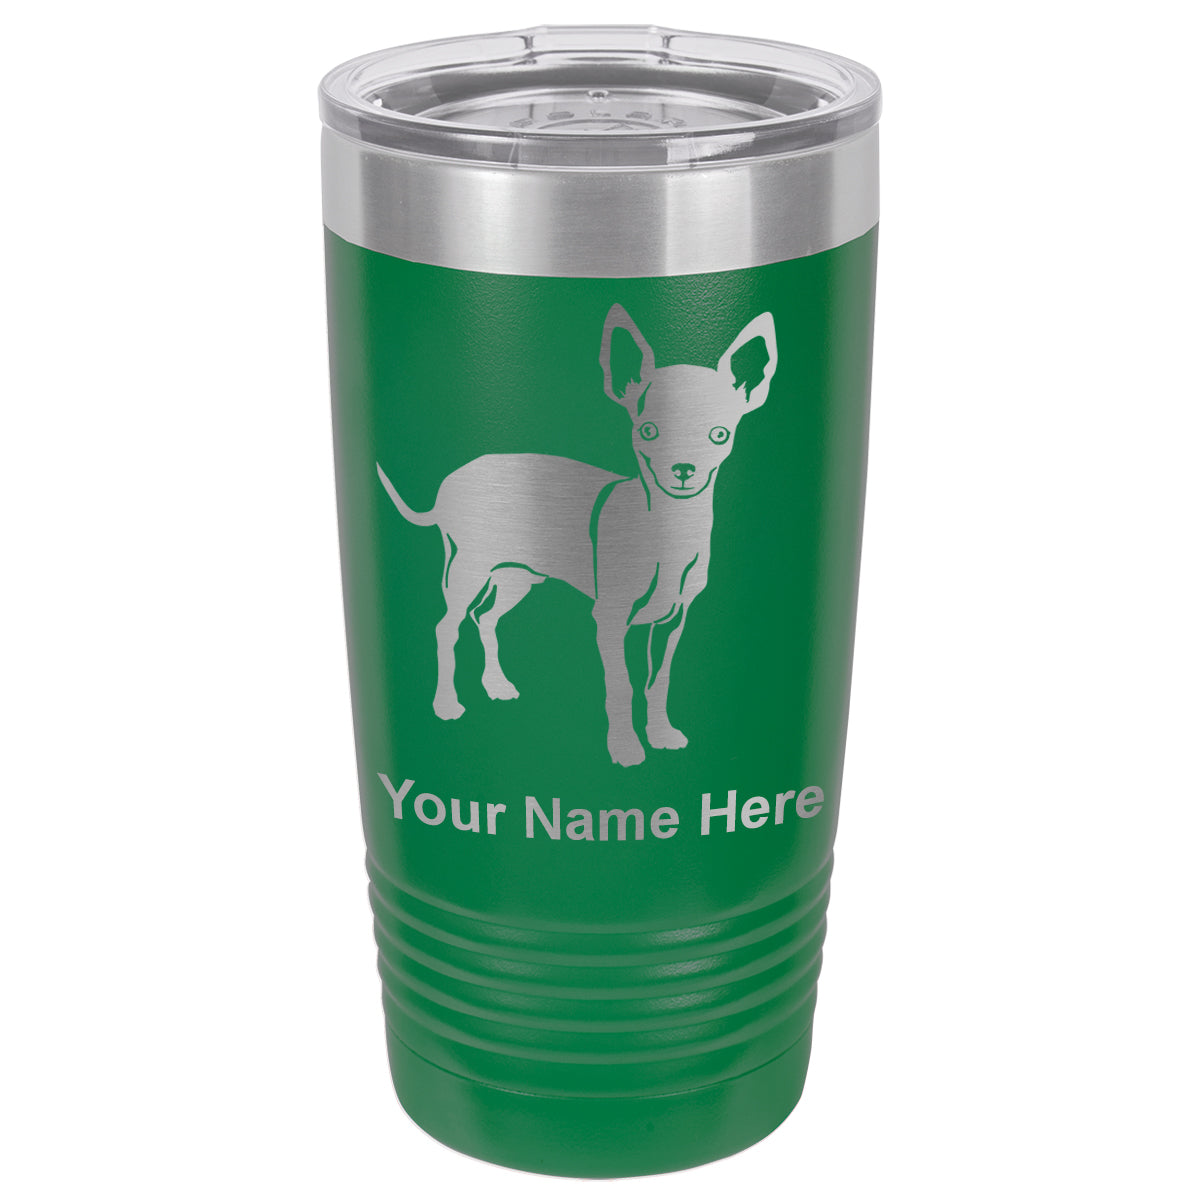 20oz Vacuum Insulated Tumbler Mug, Chihuahua Dog, Personalized Engraving Included